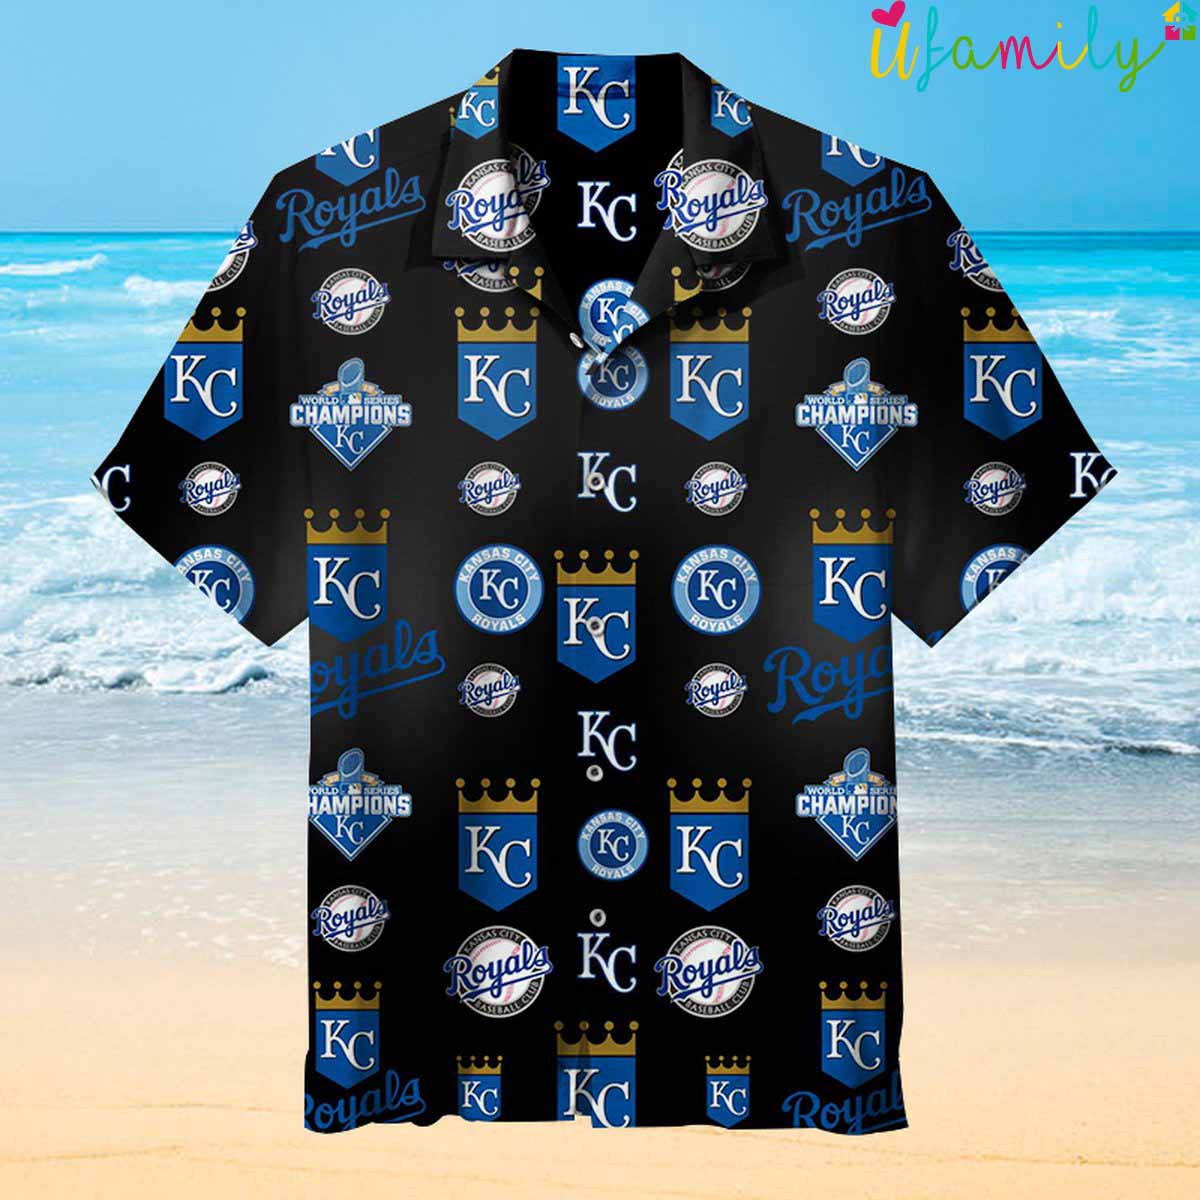 kc royals shirts